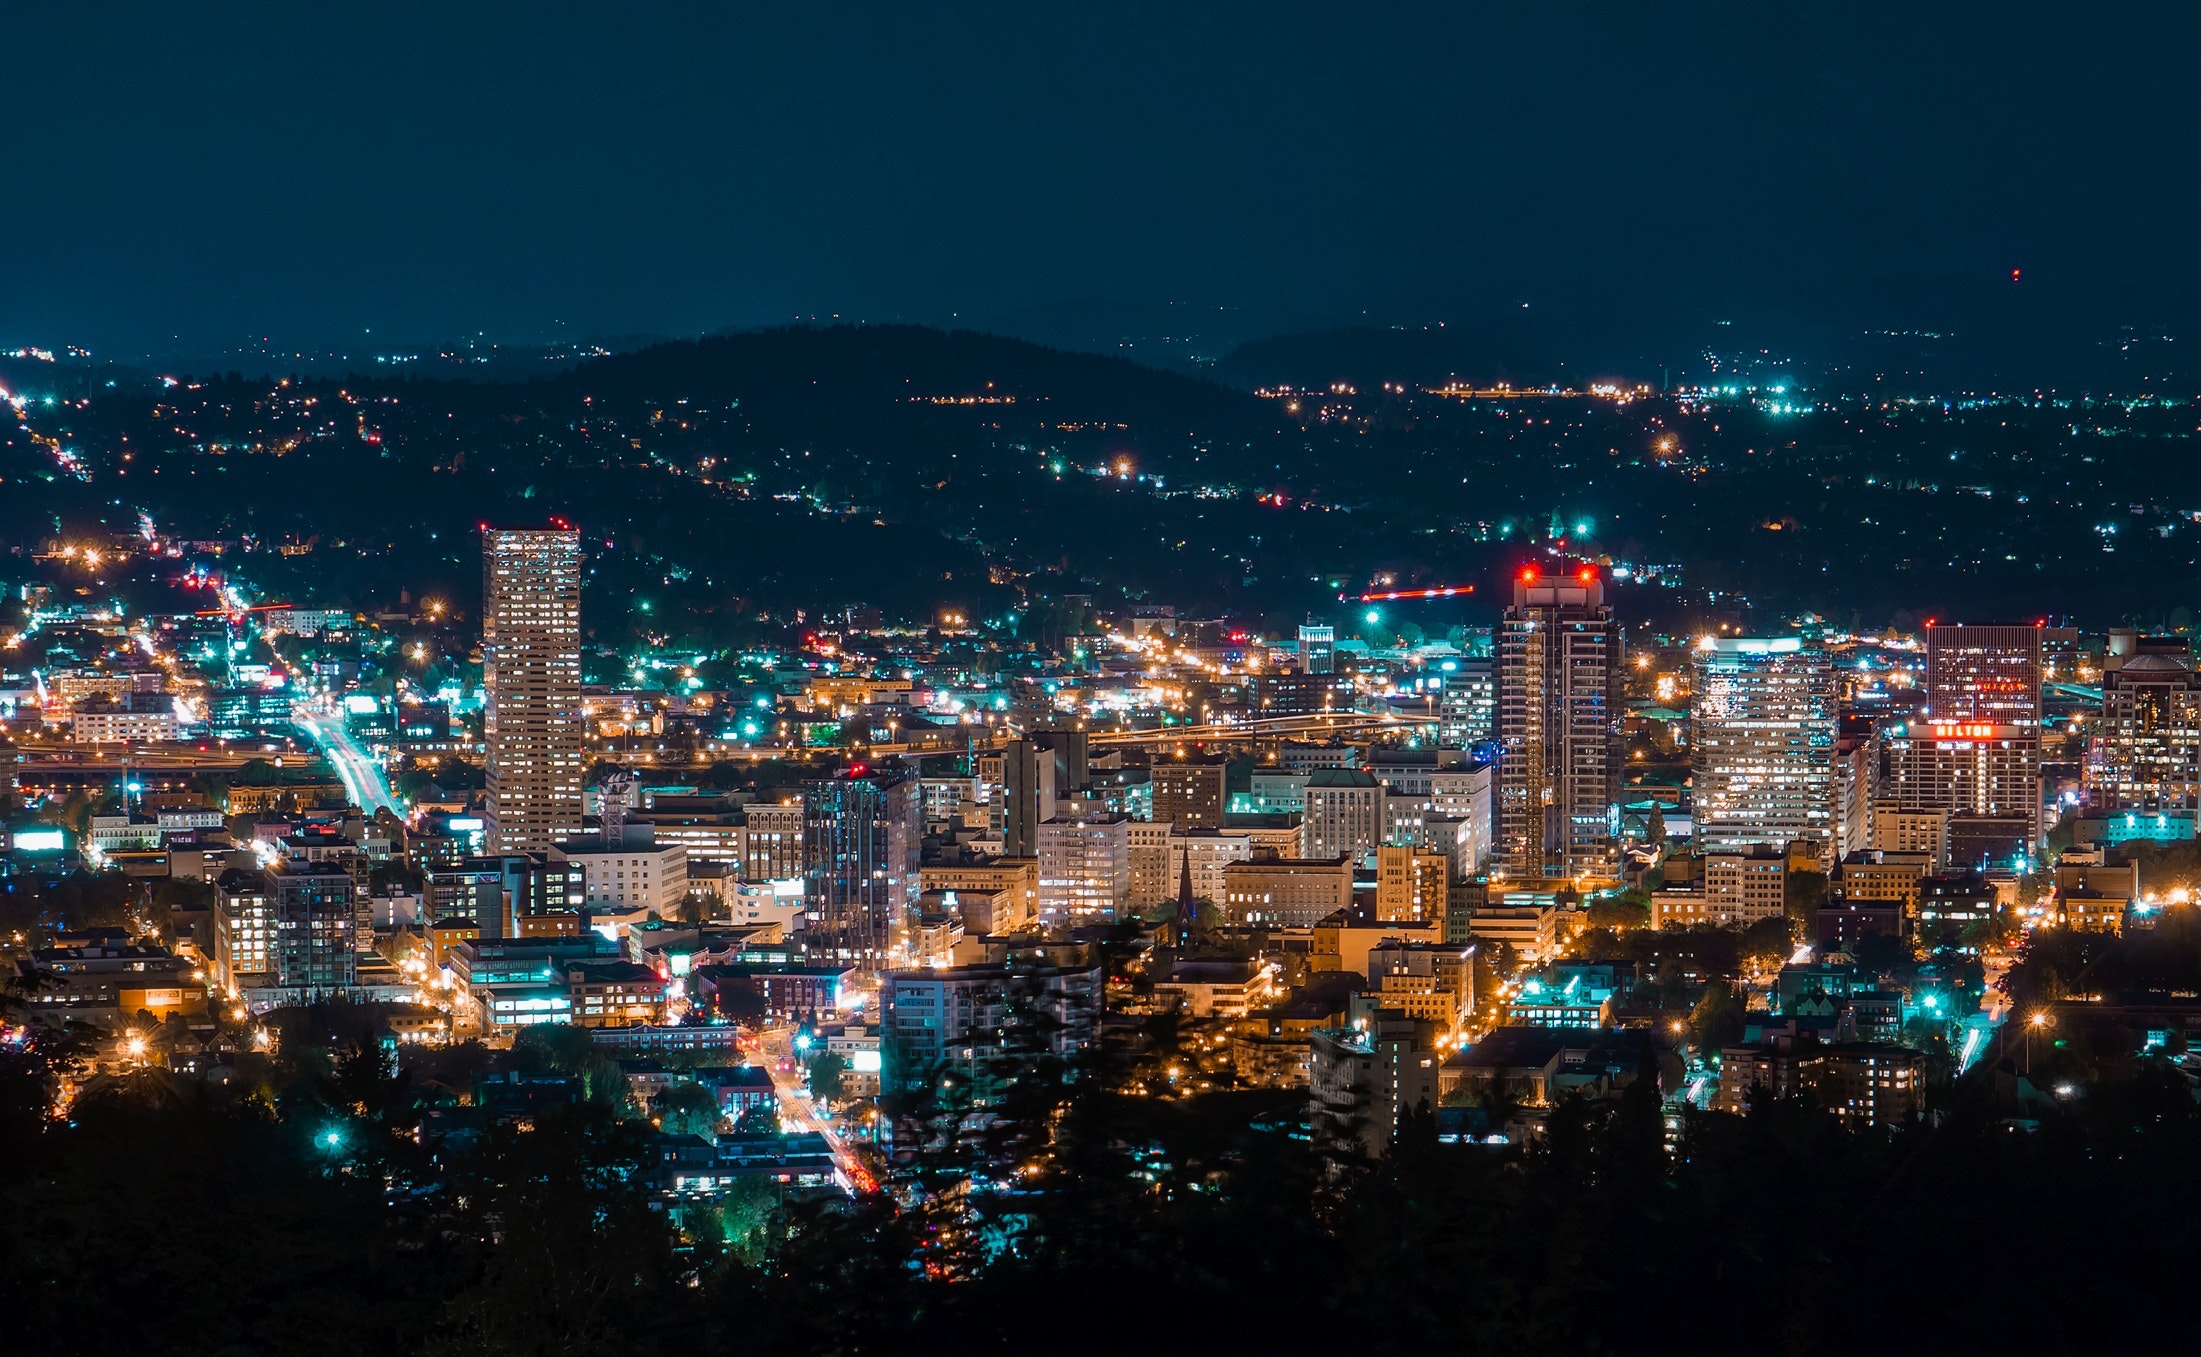 City lit up at night photo